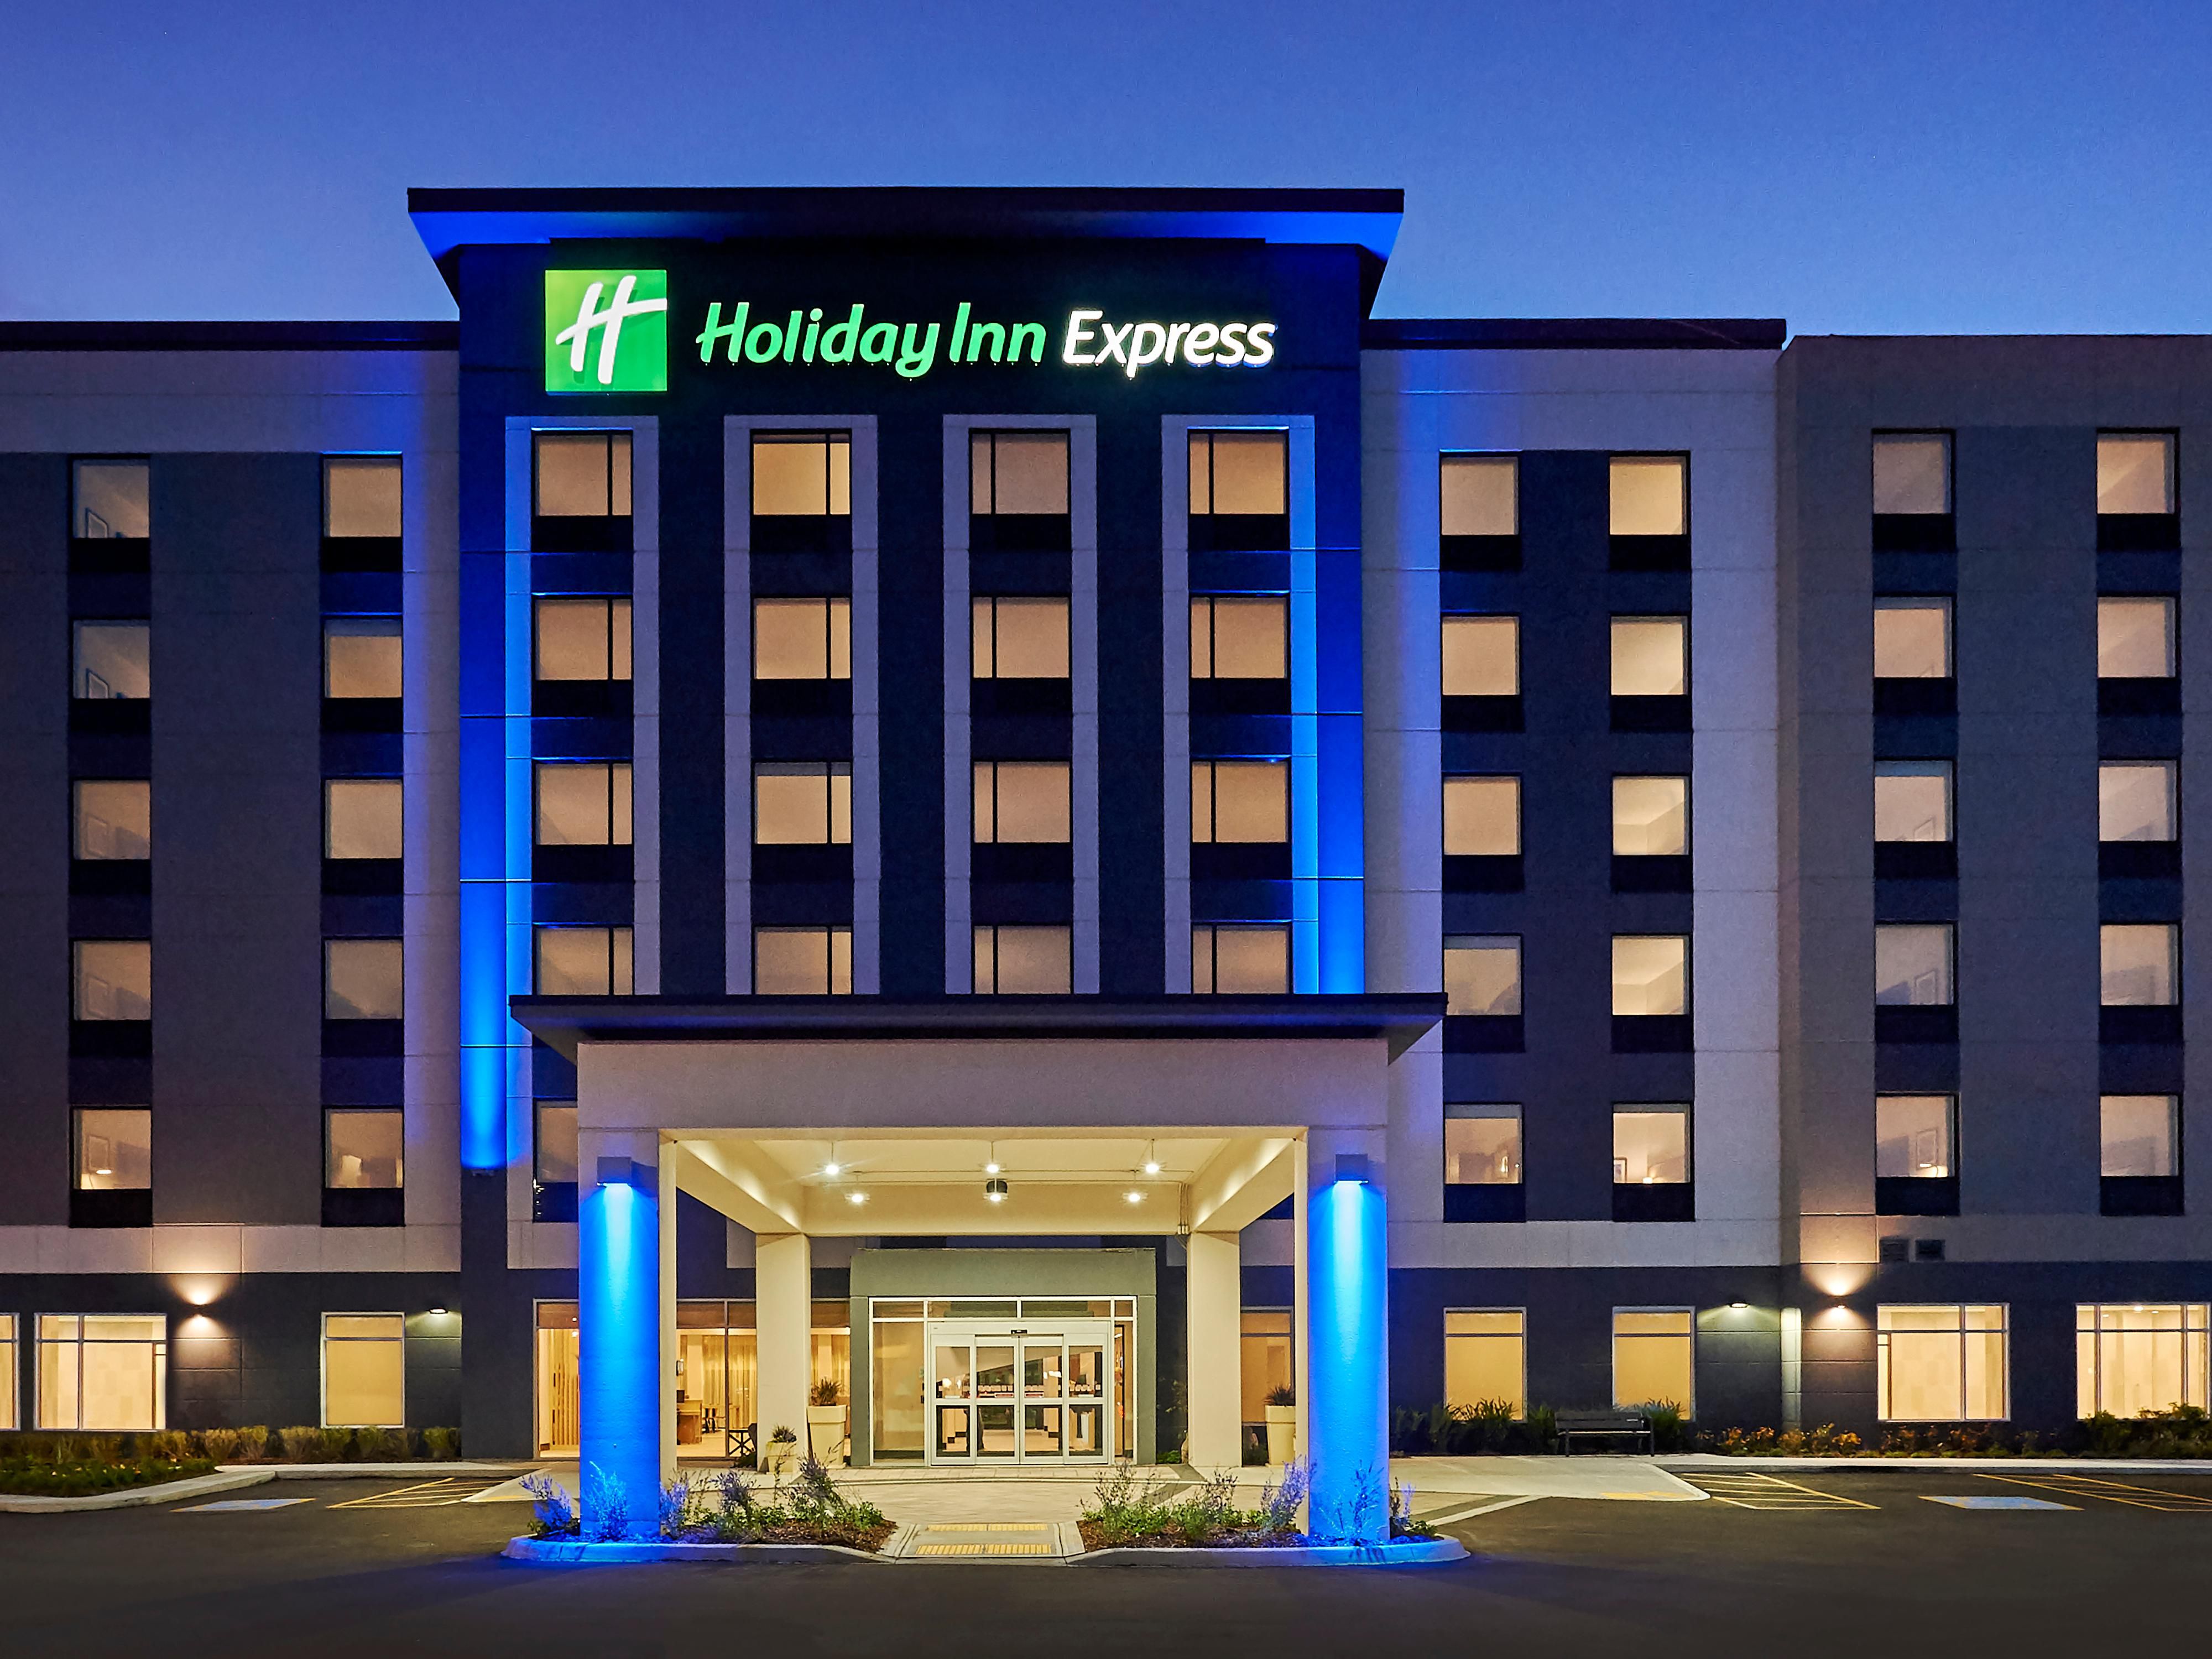 Holiday Inn Express Point Edward 6192698241 4x3